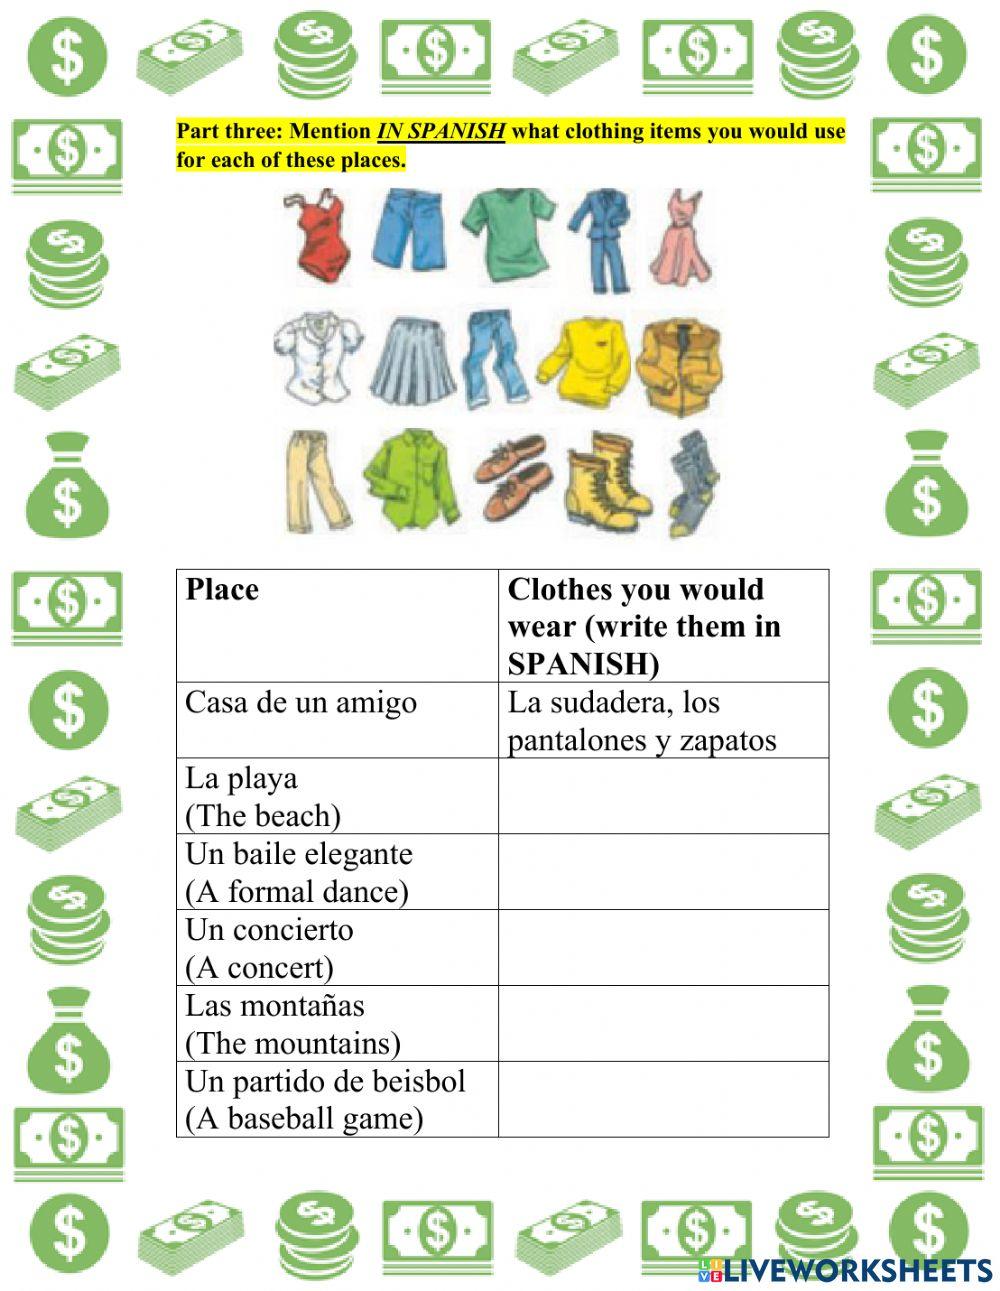 Realidades 1 Ch 7A Cuanto cuesta - Talking about money